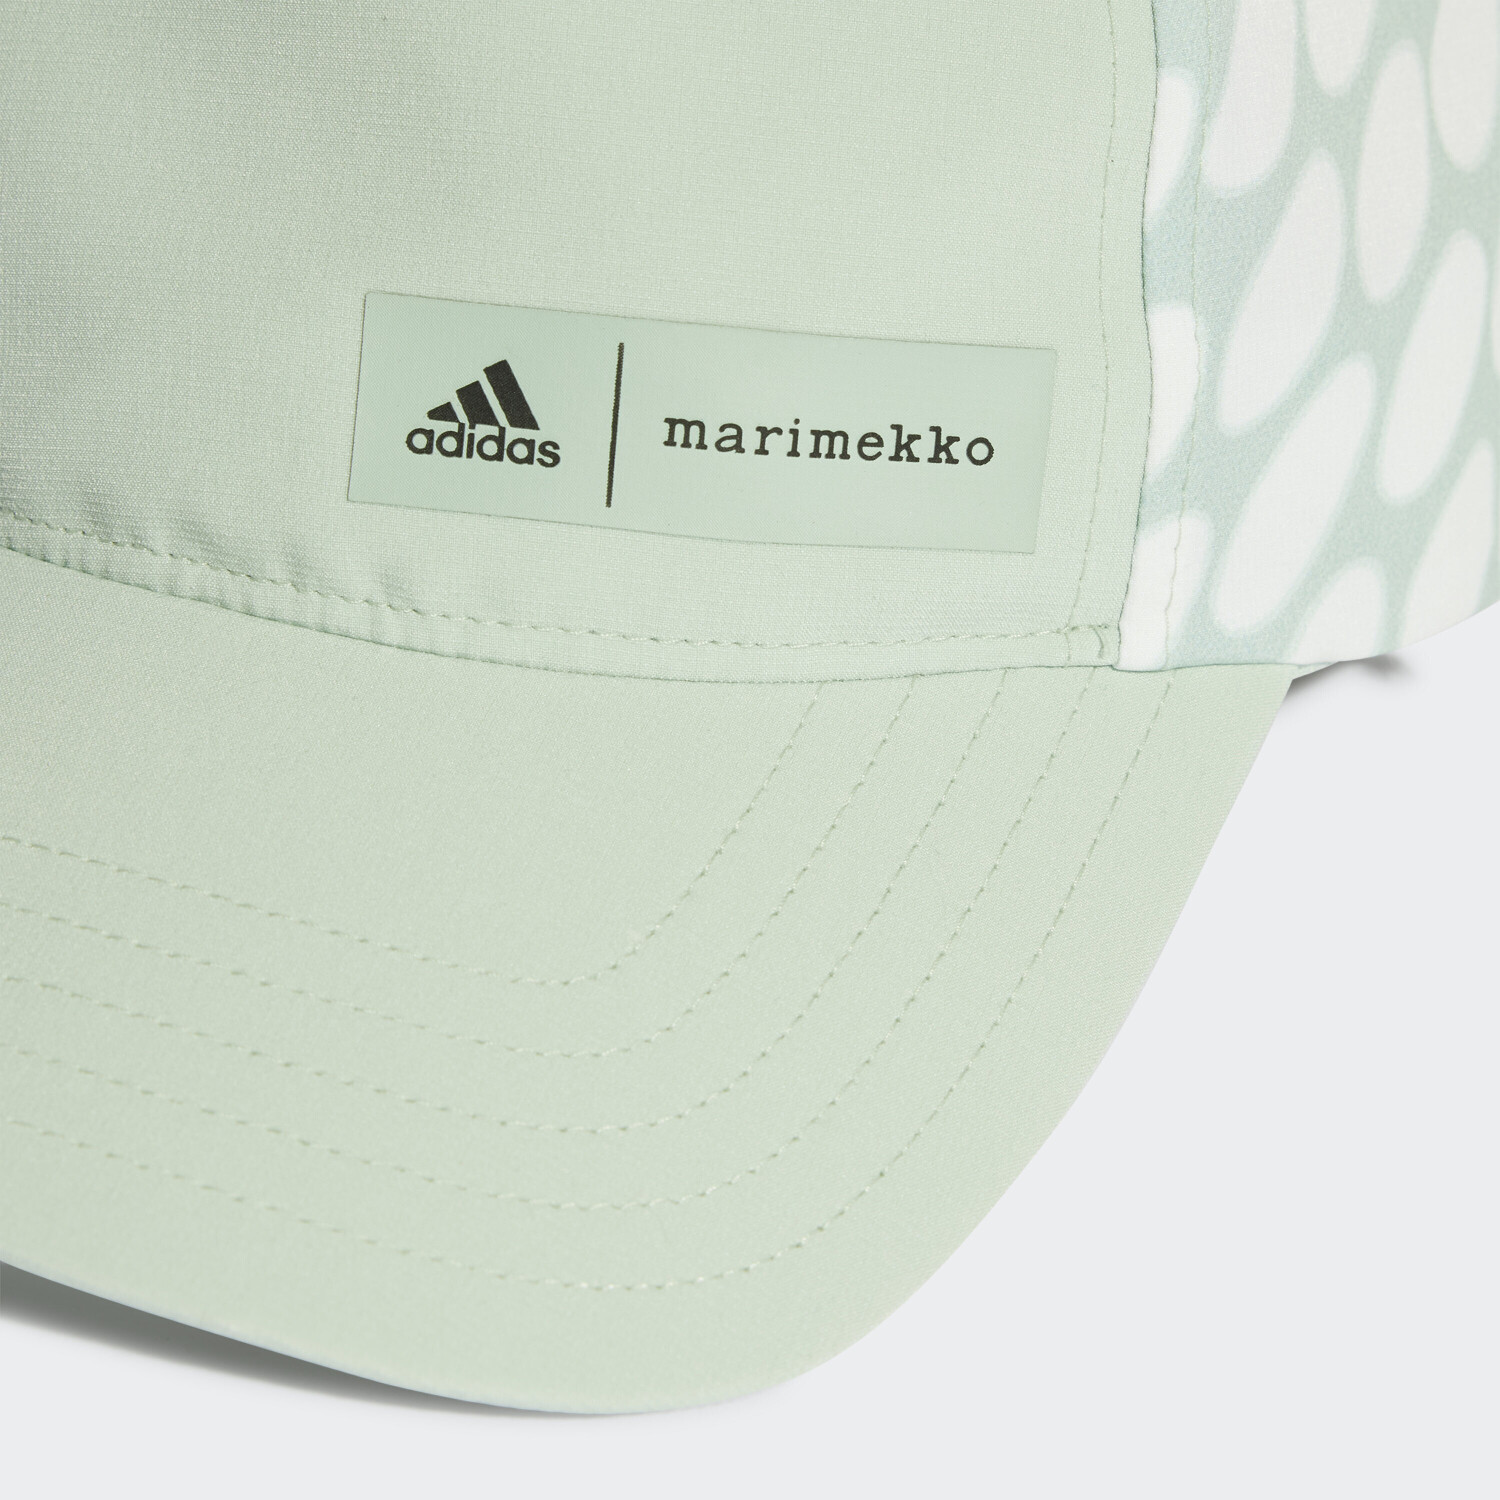 Adidas x Marimekko Aeroready Baseball Kappe (HT3901) green tint/black ab  28,00 € | Preisvergleich bei